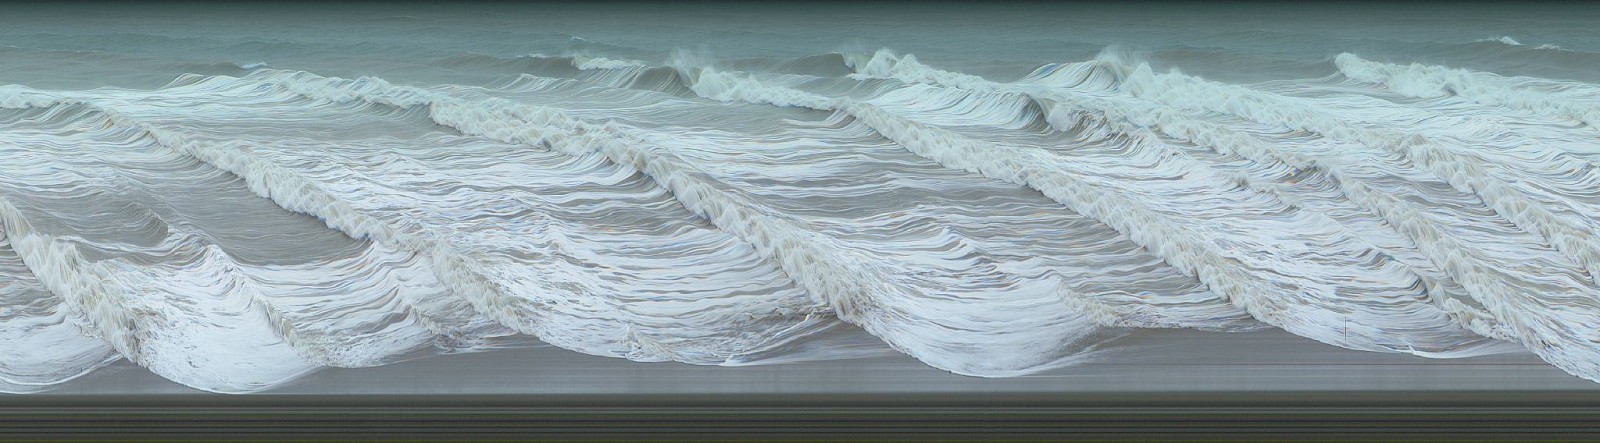 Jay Mark Johnson, STORM AT SEA #9B, 2010 Malibu - Ventura CA
archival pigment on paper, mounted on aluminum, 40 x 144 in. (101.6 x 365.8 cm)